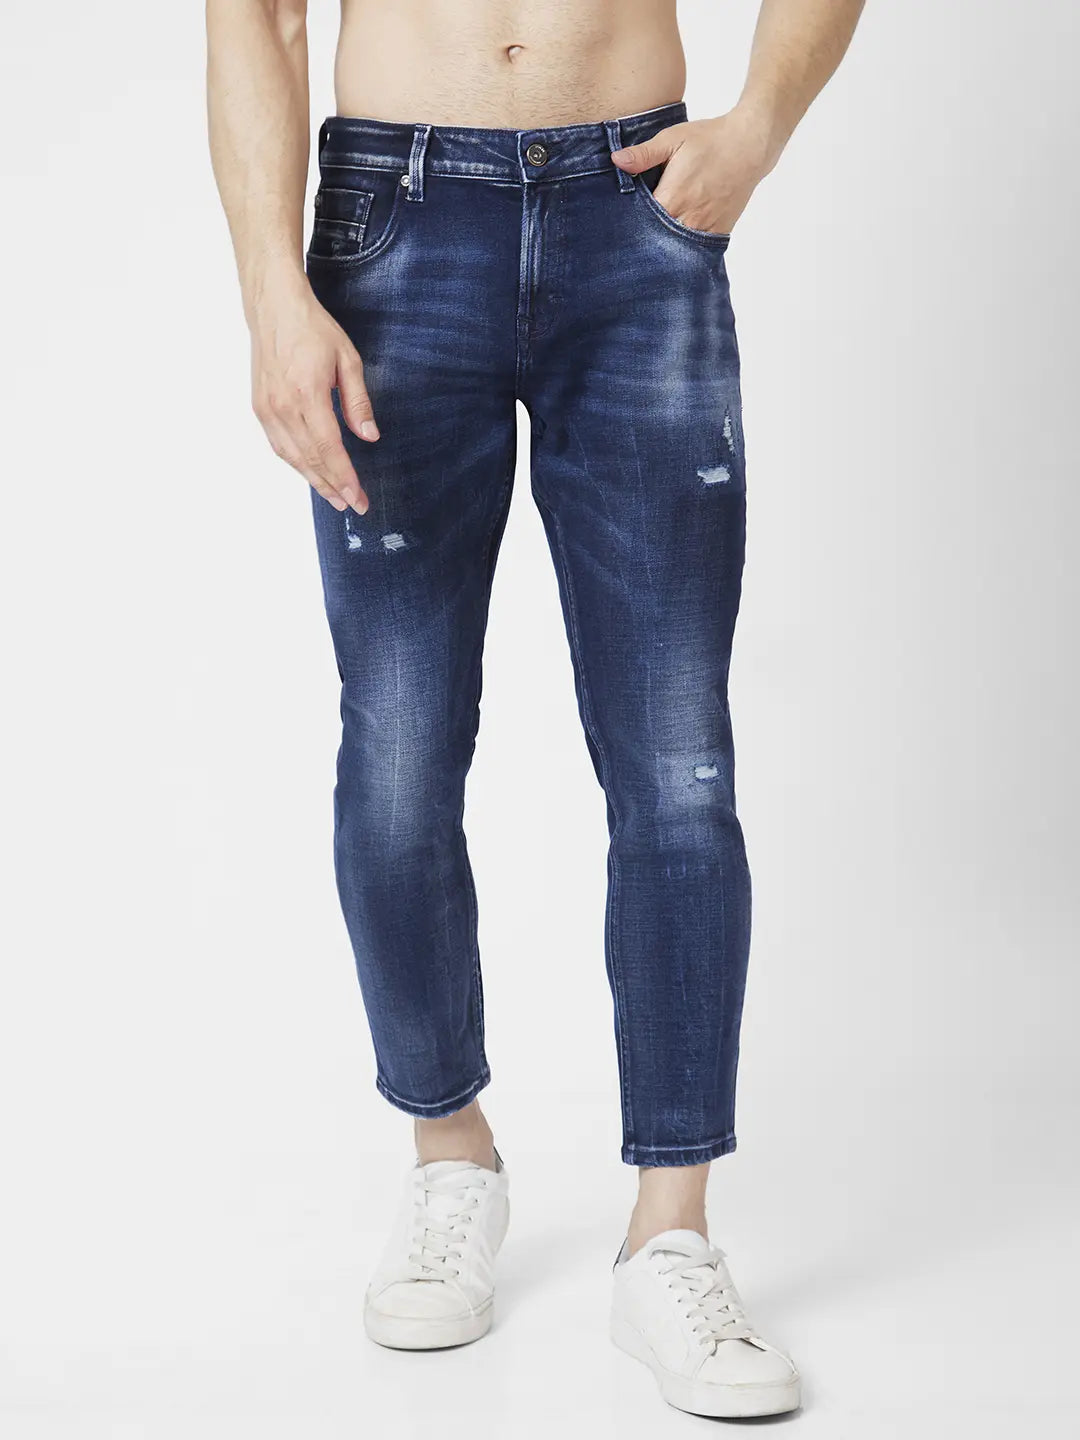 Spykar Light Blue Cotton Regular Fit Narrow Length Jeans For Men (Rover) -  ro02bb09ltblue